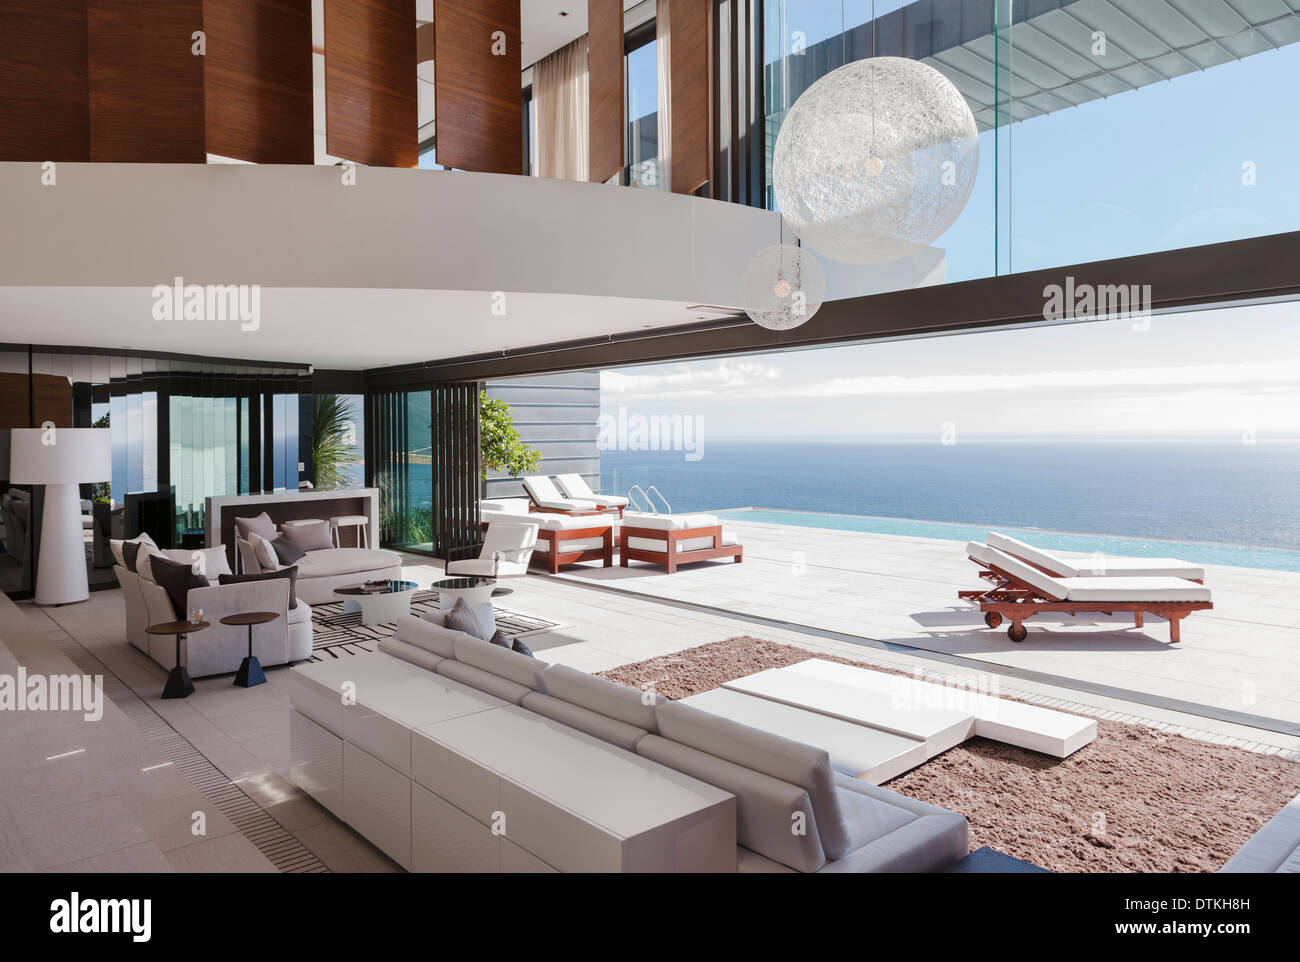 Living room in modern house overlooking ocean Stock Photo